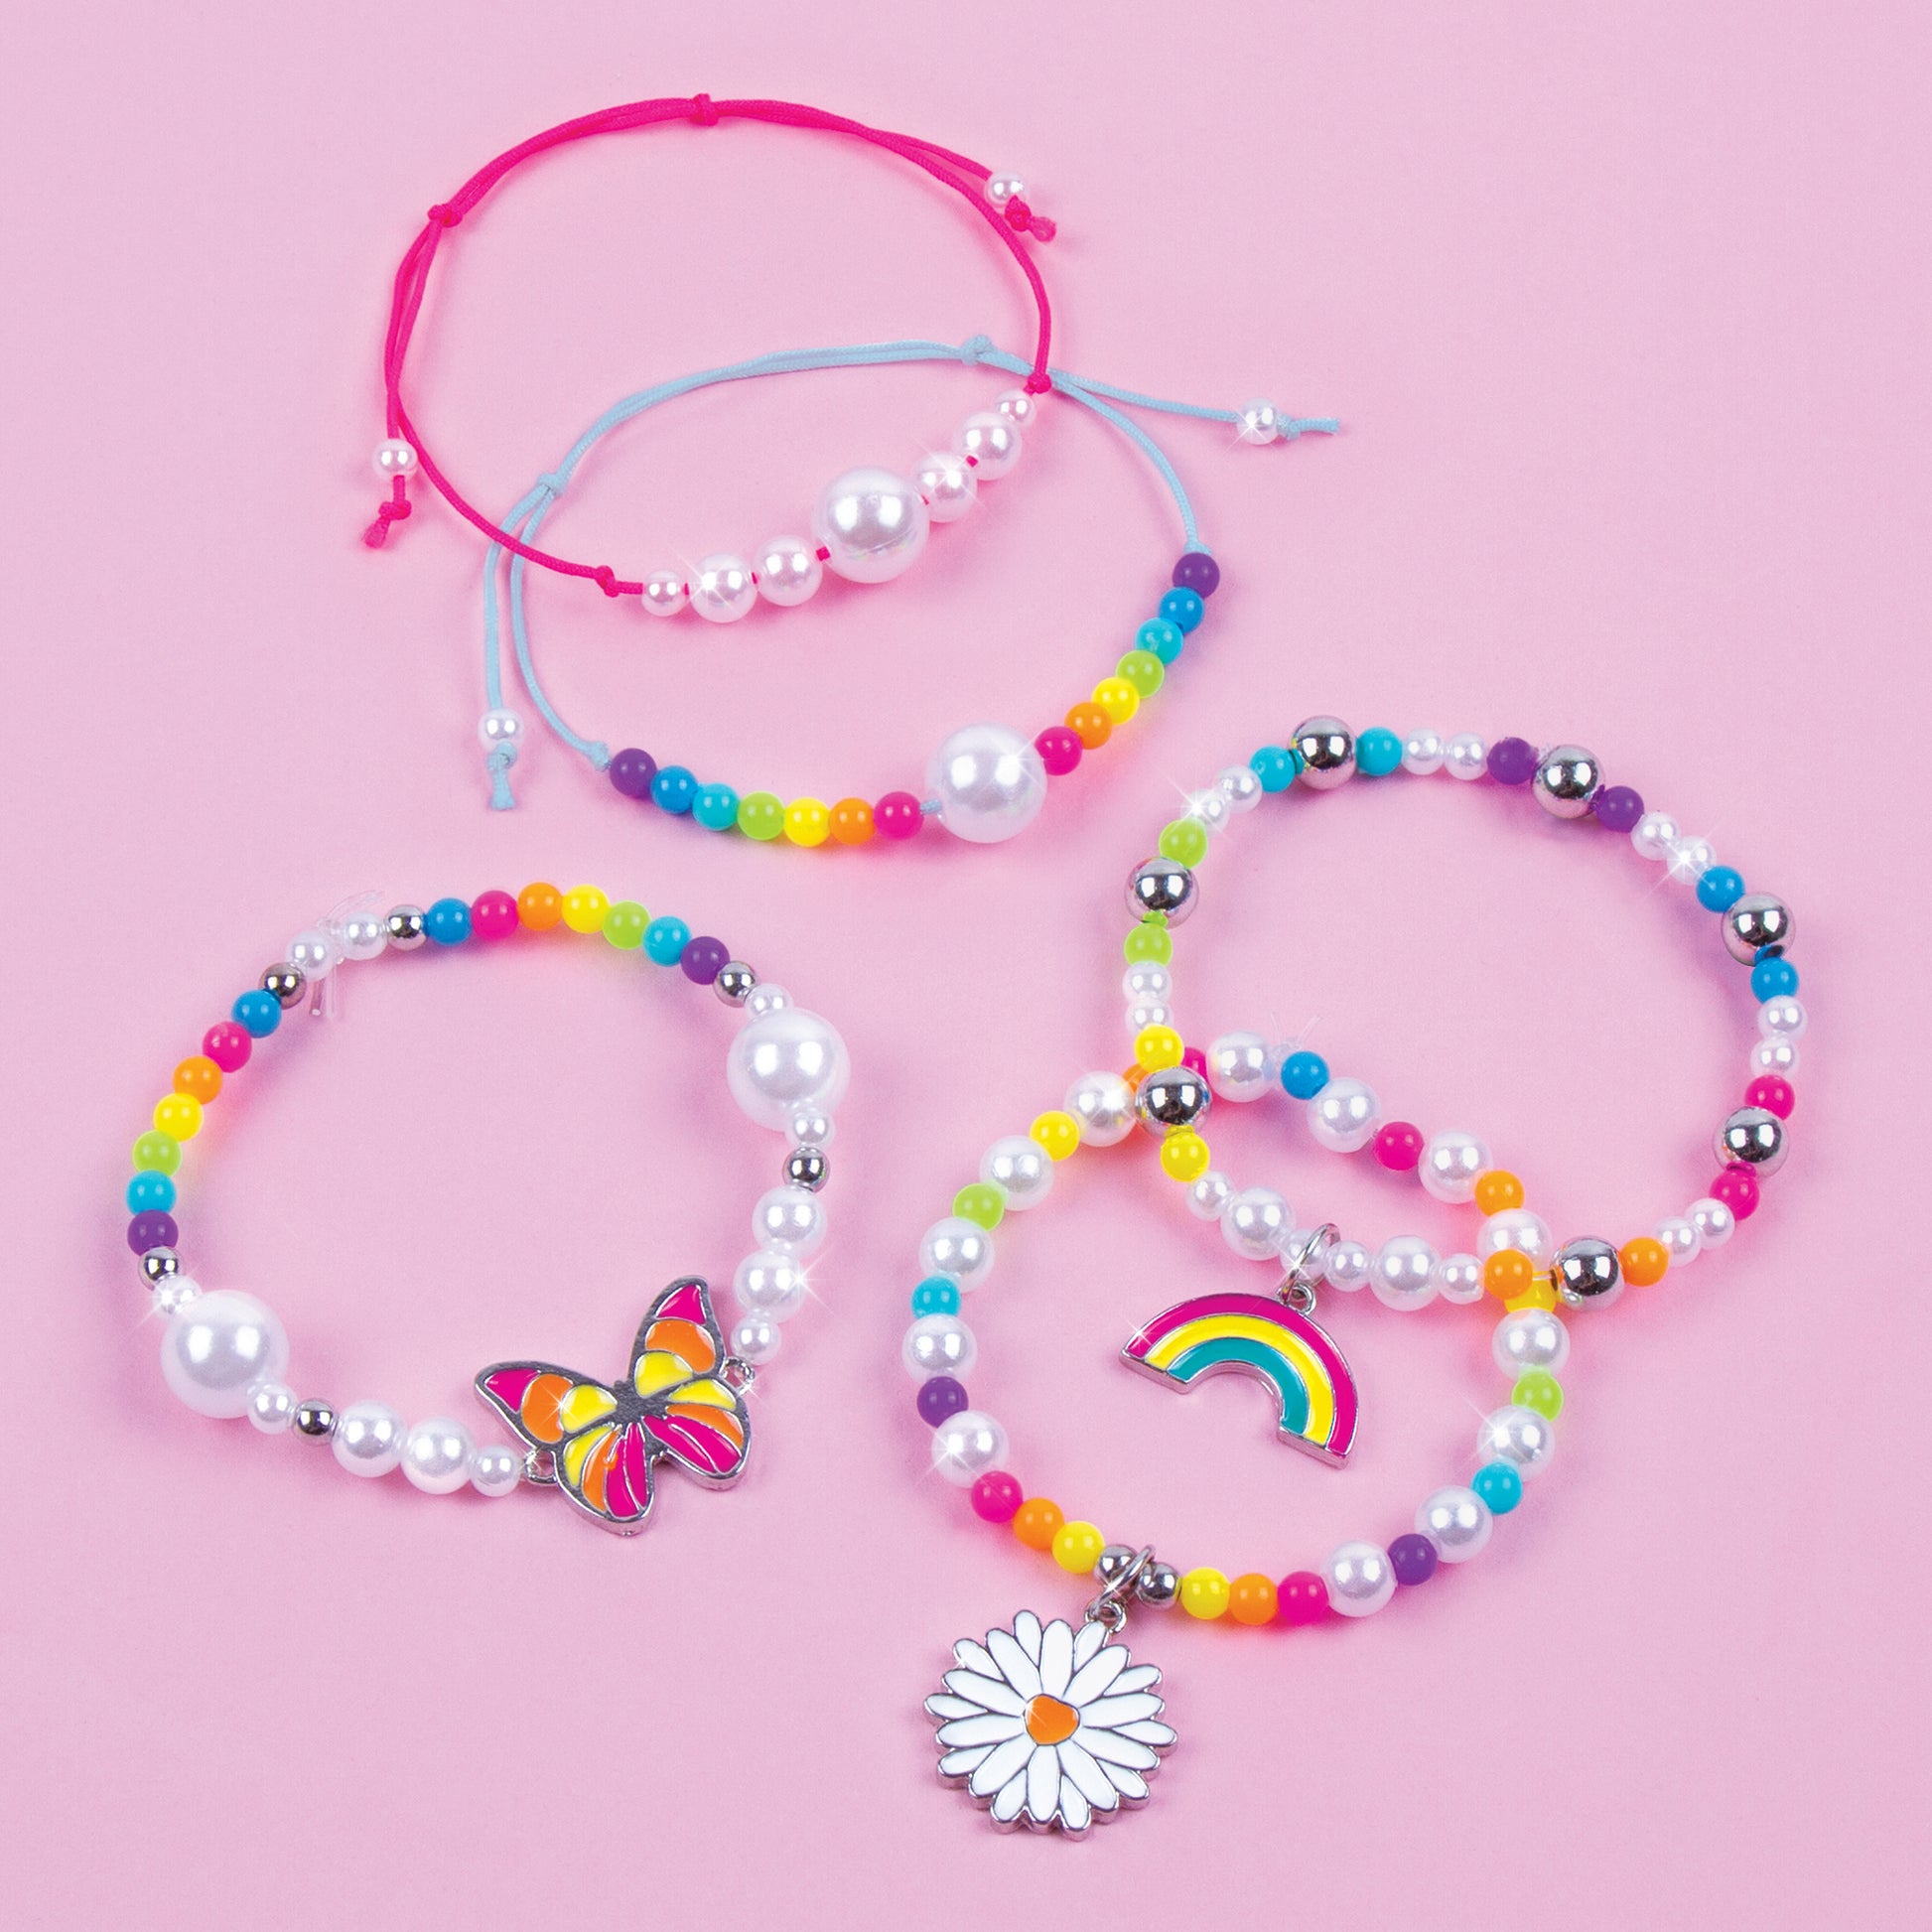 Create 5 colorful DIY bracelets with the Rainbow Treasure Bracelet